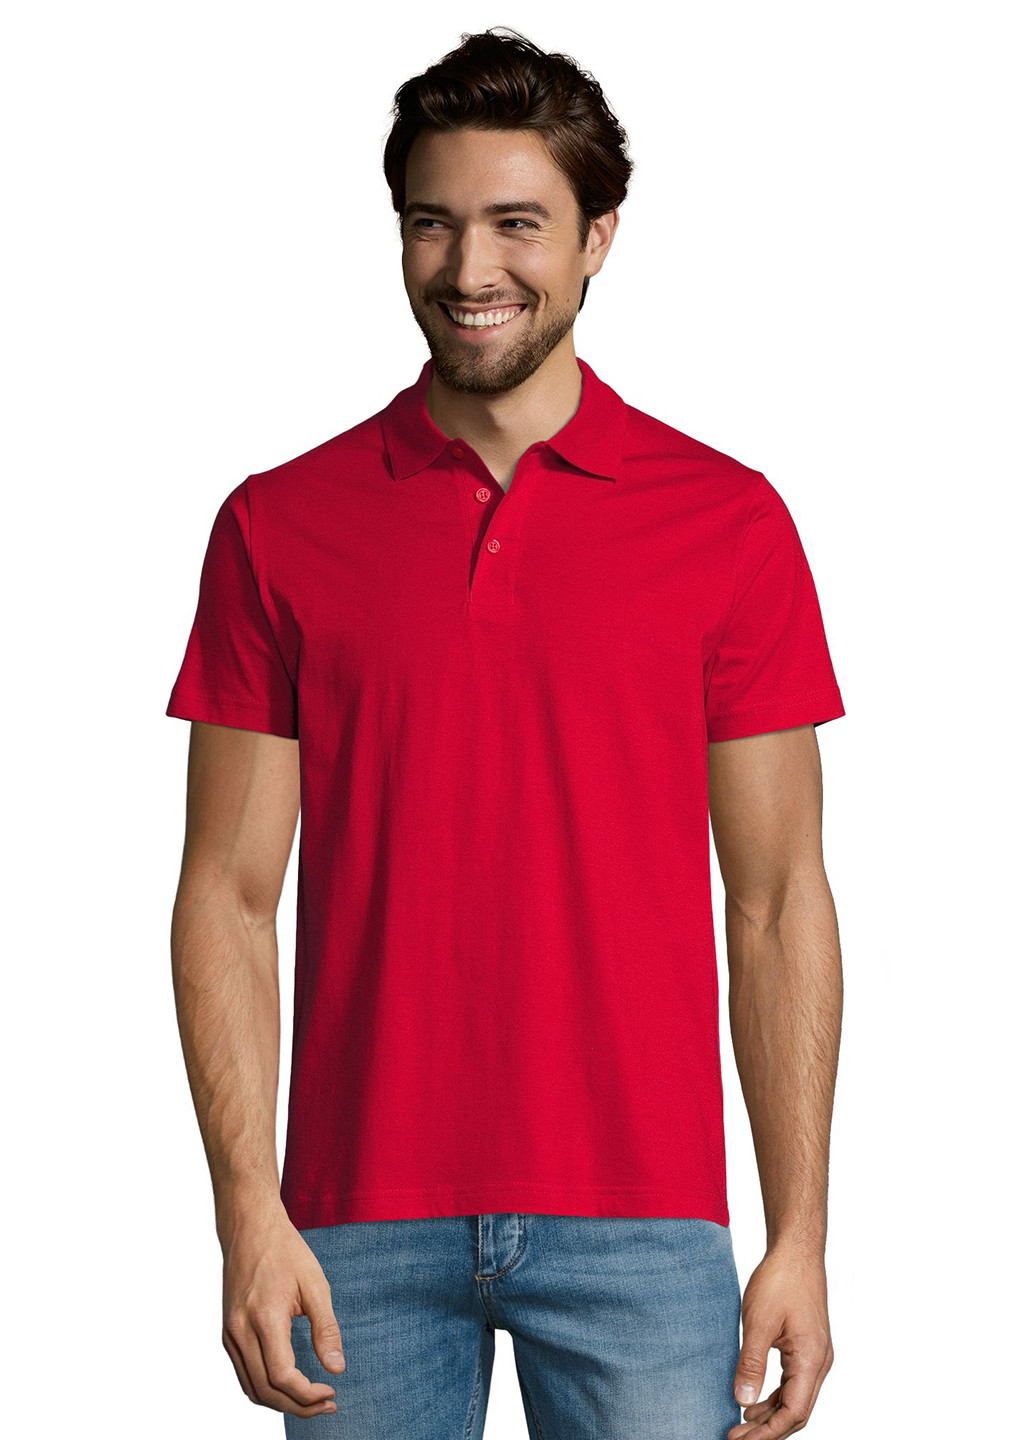 Красная футболка-поло для мужчин Sol's